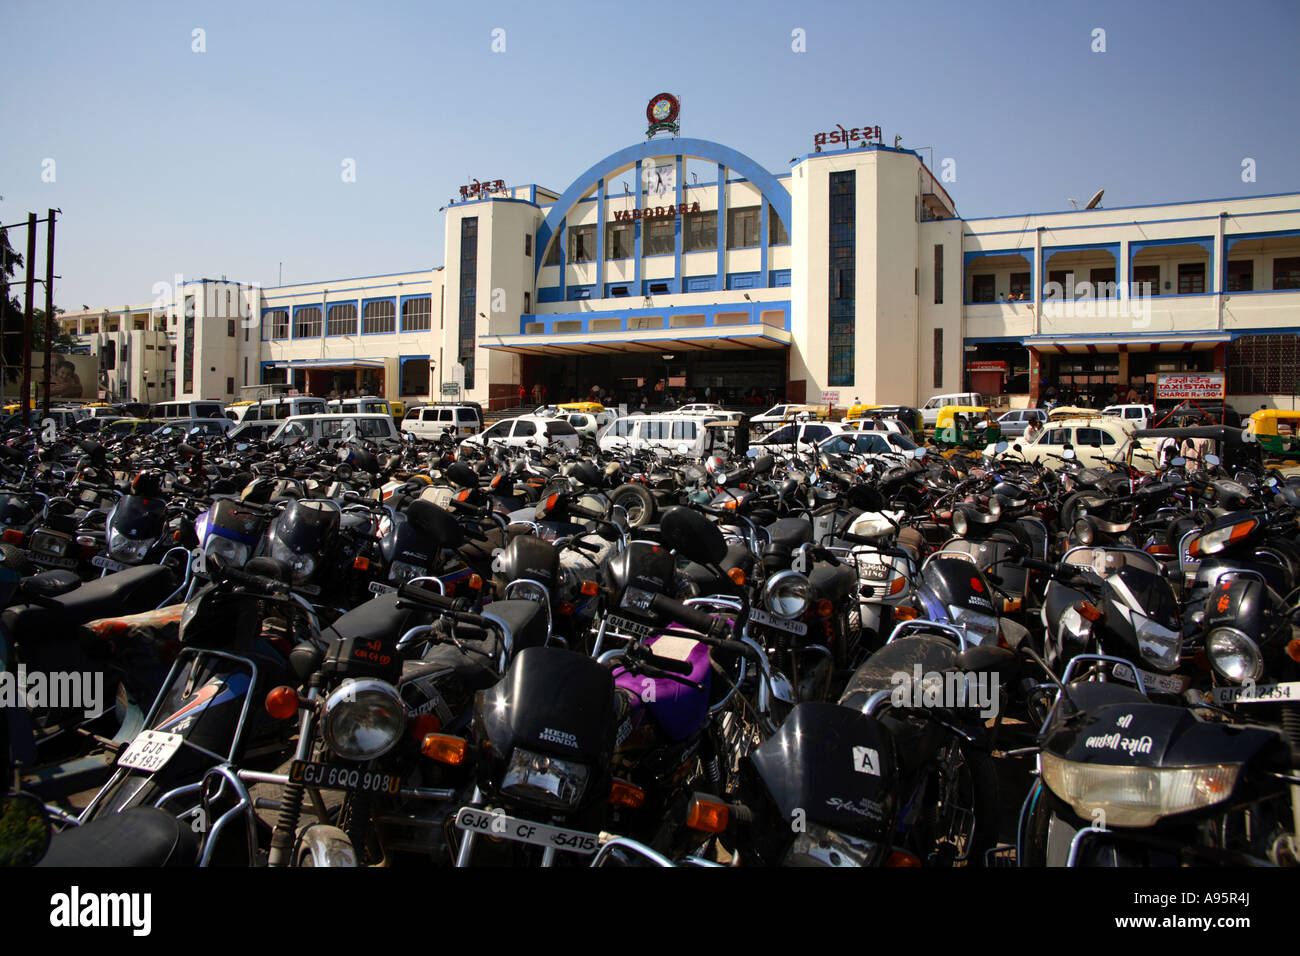 Full scooter park outside railway station, Vadodara, Gujarat, India Stock Photo